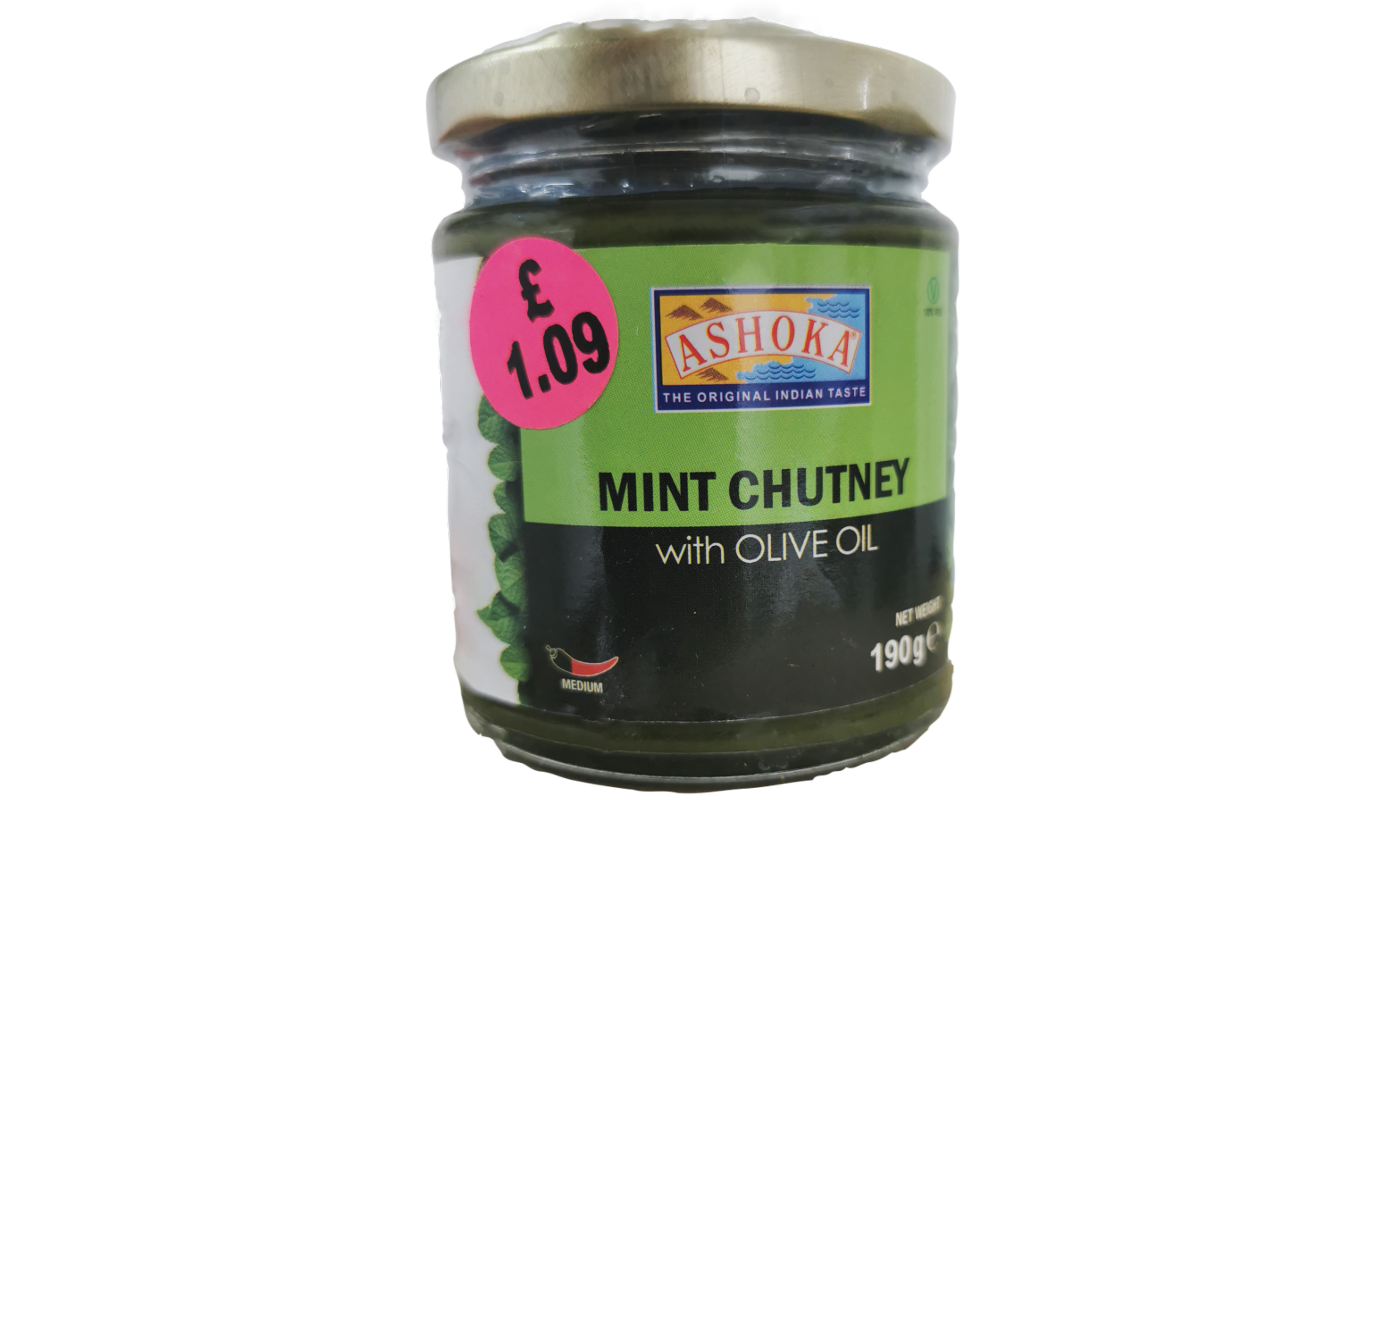 Ashoka Mint Chutney with Olive Oil